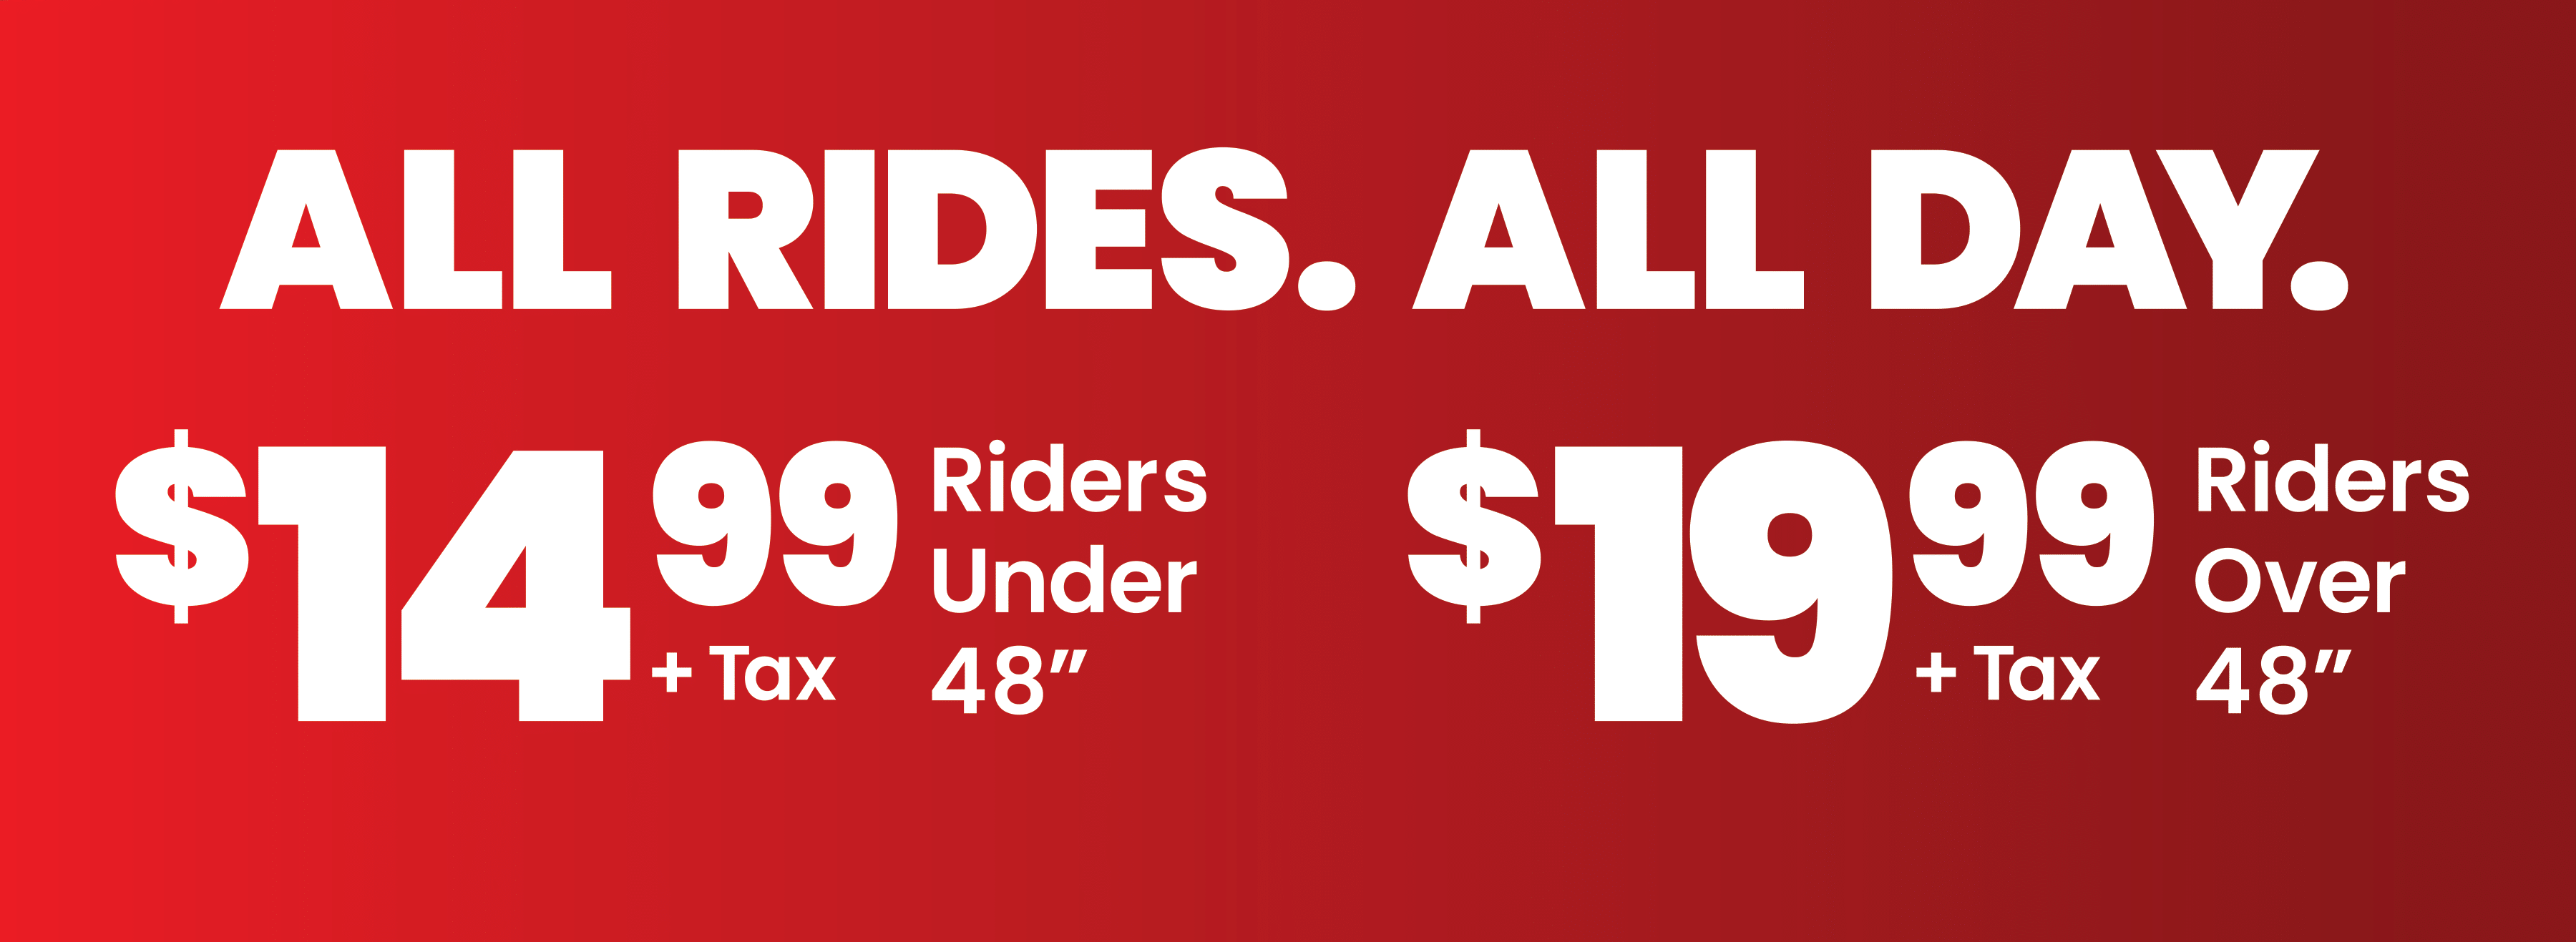 Rides Prices